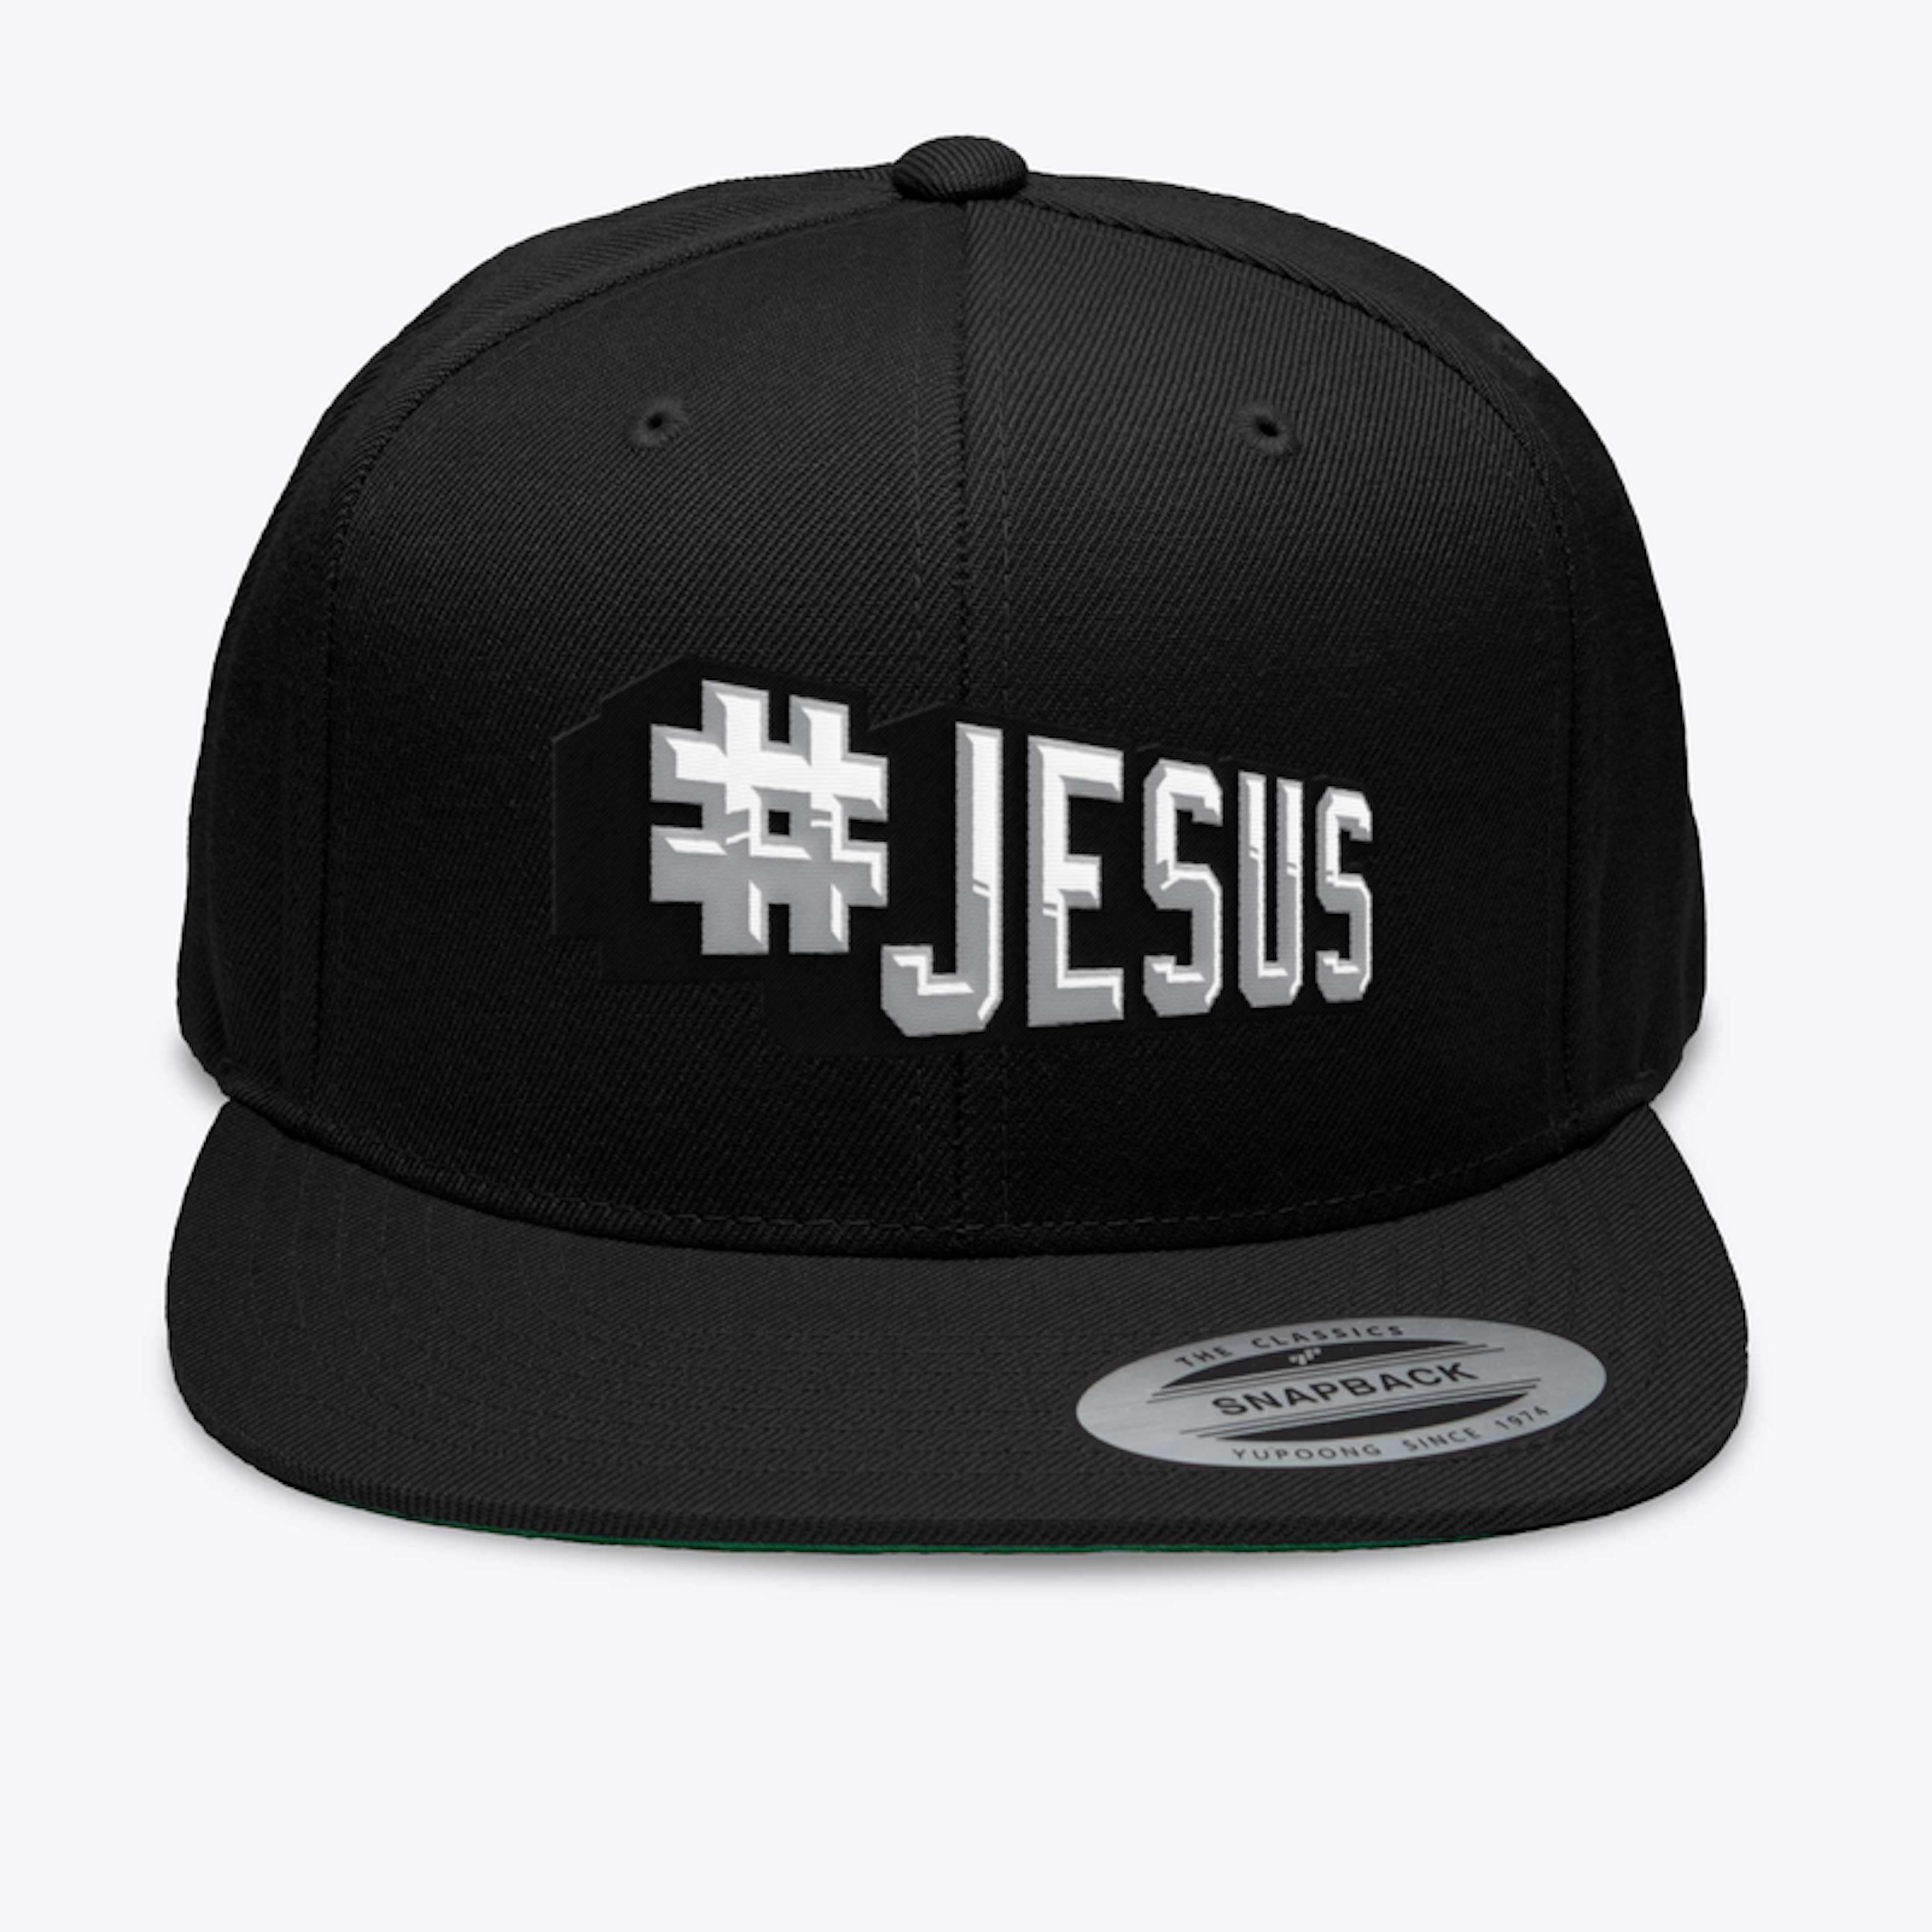 Revolution4Christ Hats  #Jesus